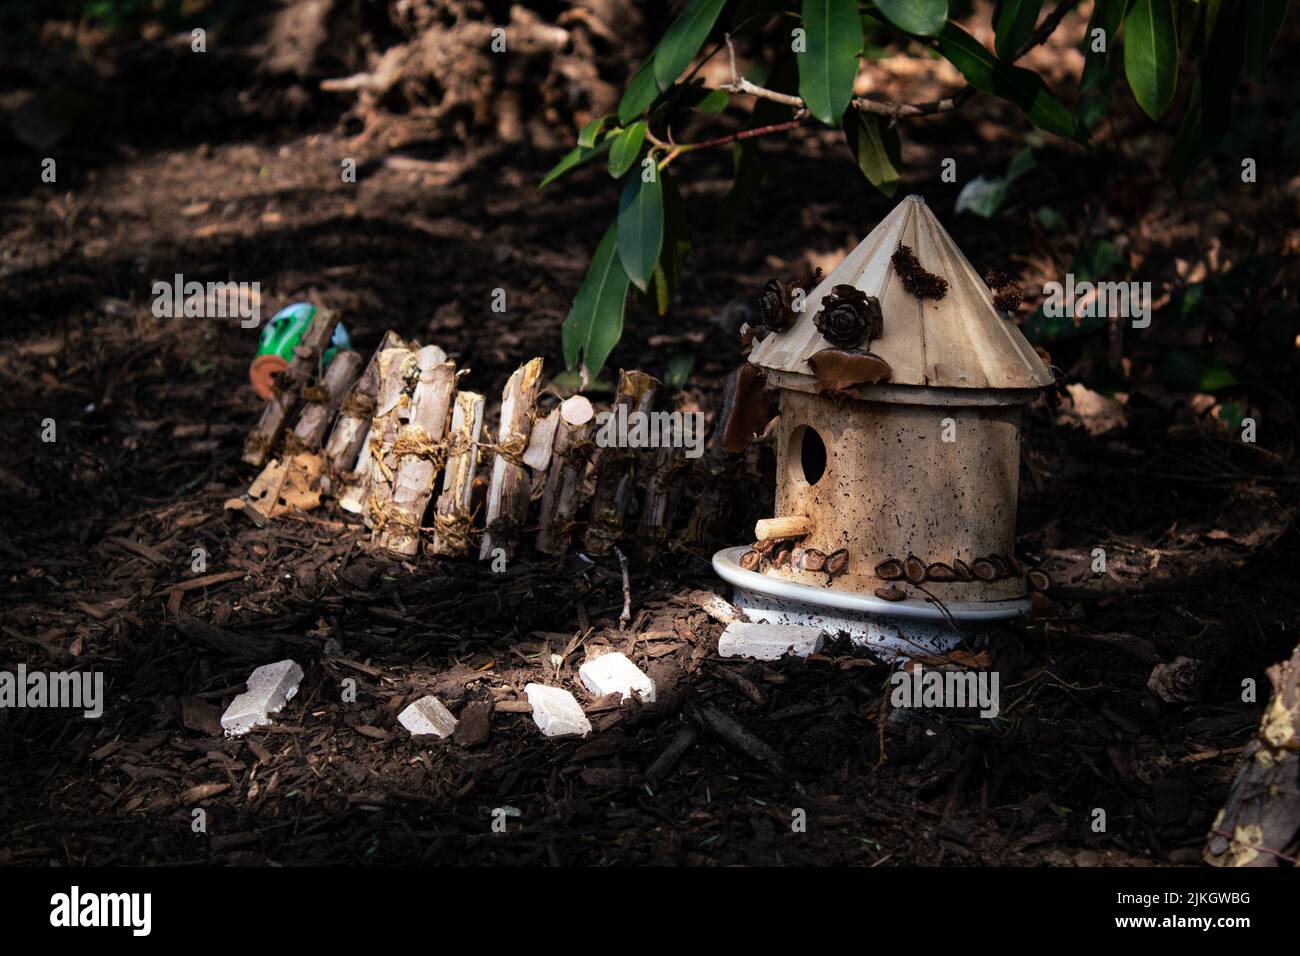 A small round wooden birdhouse in the garden Stock Photo